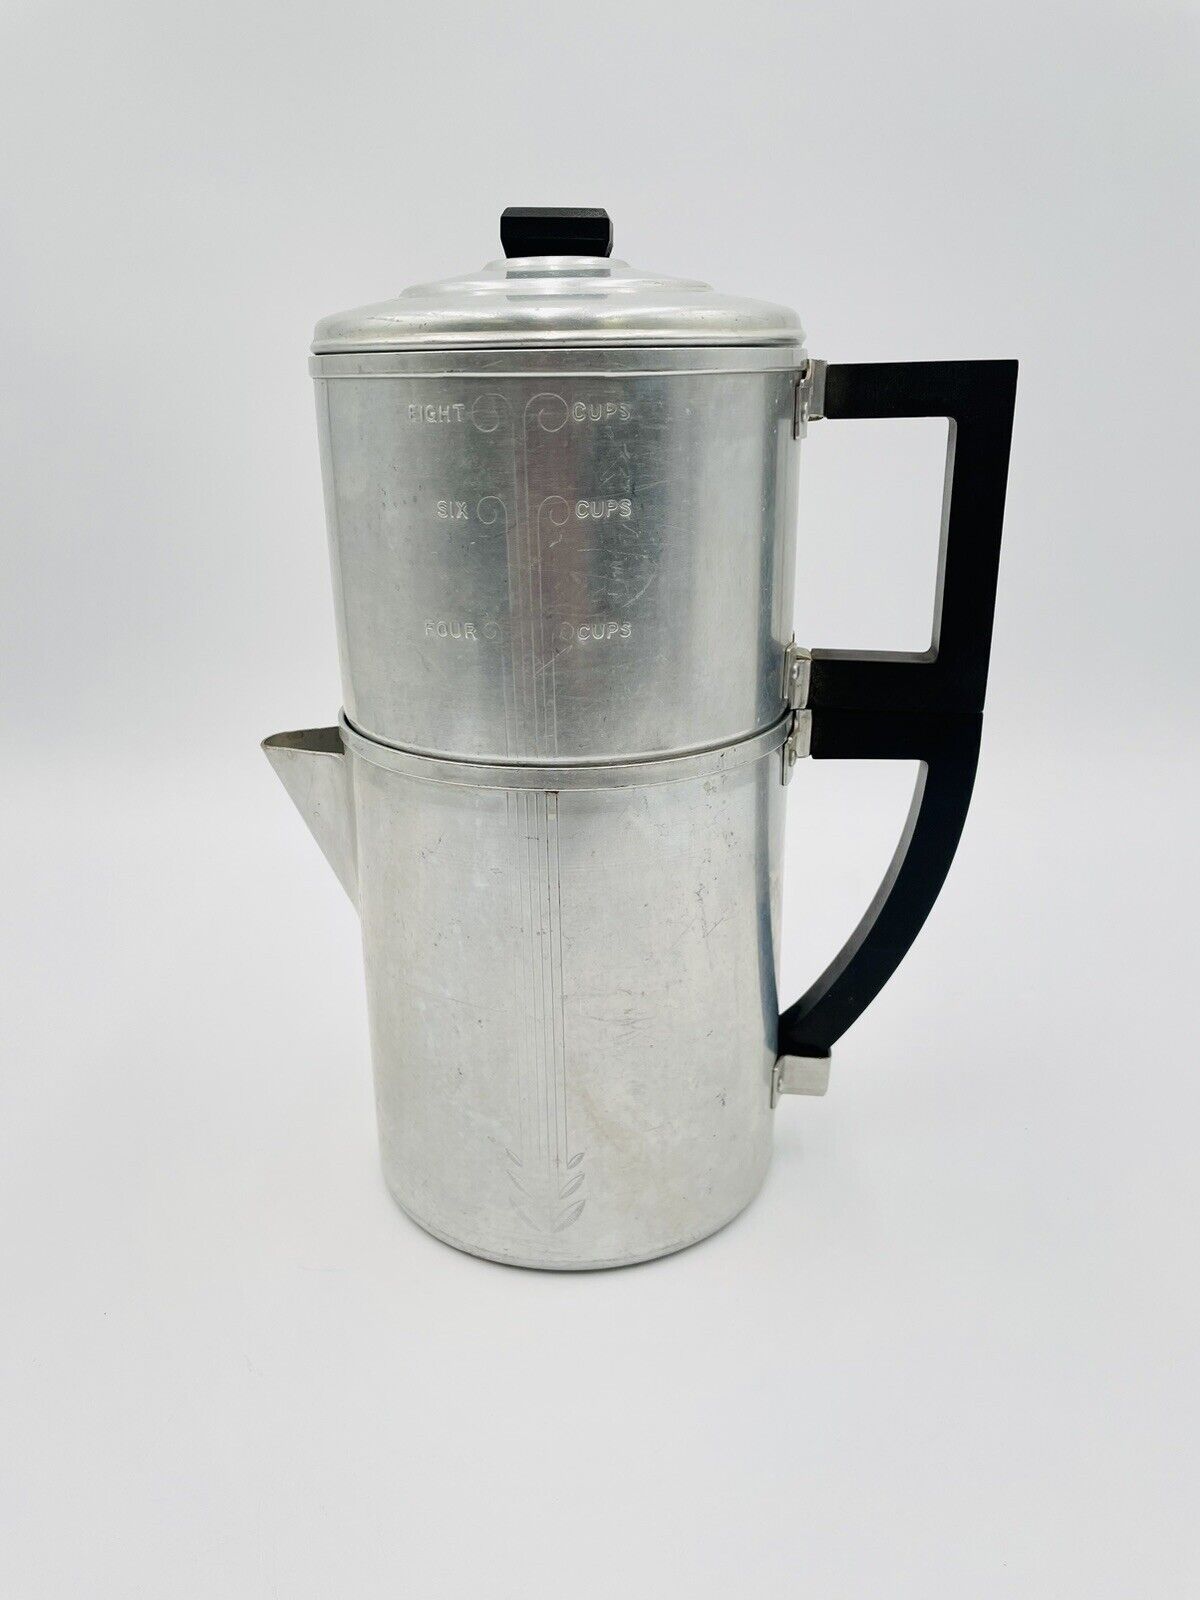 Wear-Ever Aluminum 8 Cup Coffee Pot Percolator#2032 Outdoor Camping Vintage USA